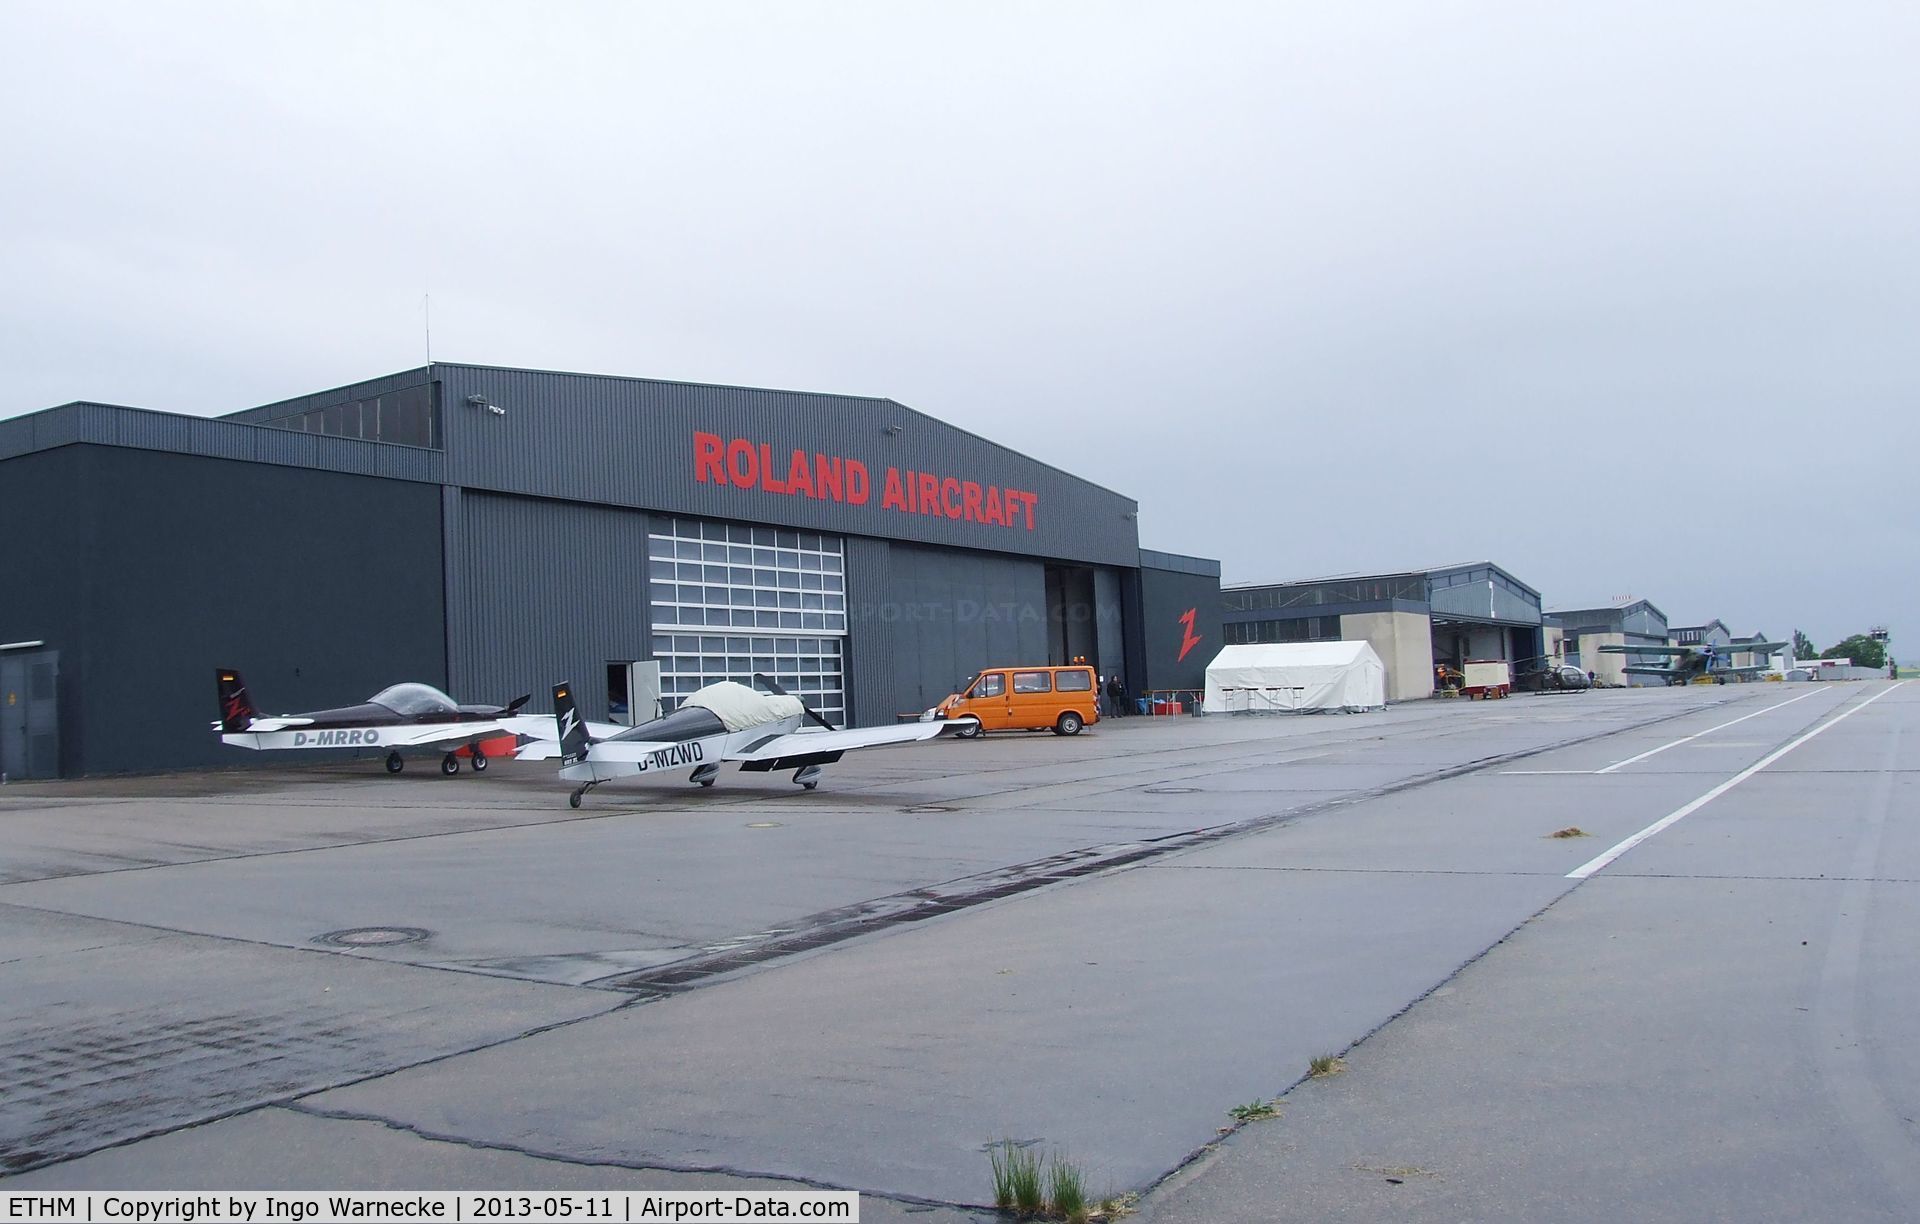 Mendig Army Base Airport, Niedermendig Germany (ETHM) - Roland Aircraft hangar at former German Army Aviation base, now civilian Mendig airfield 